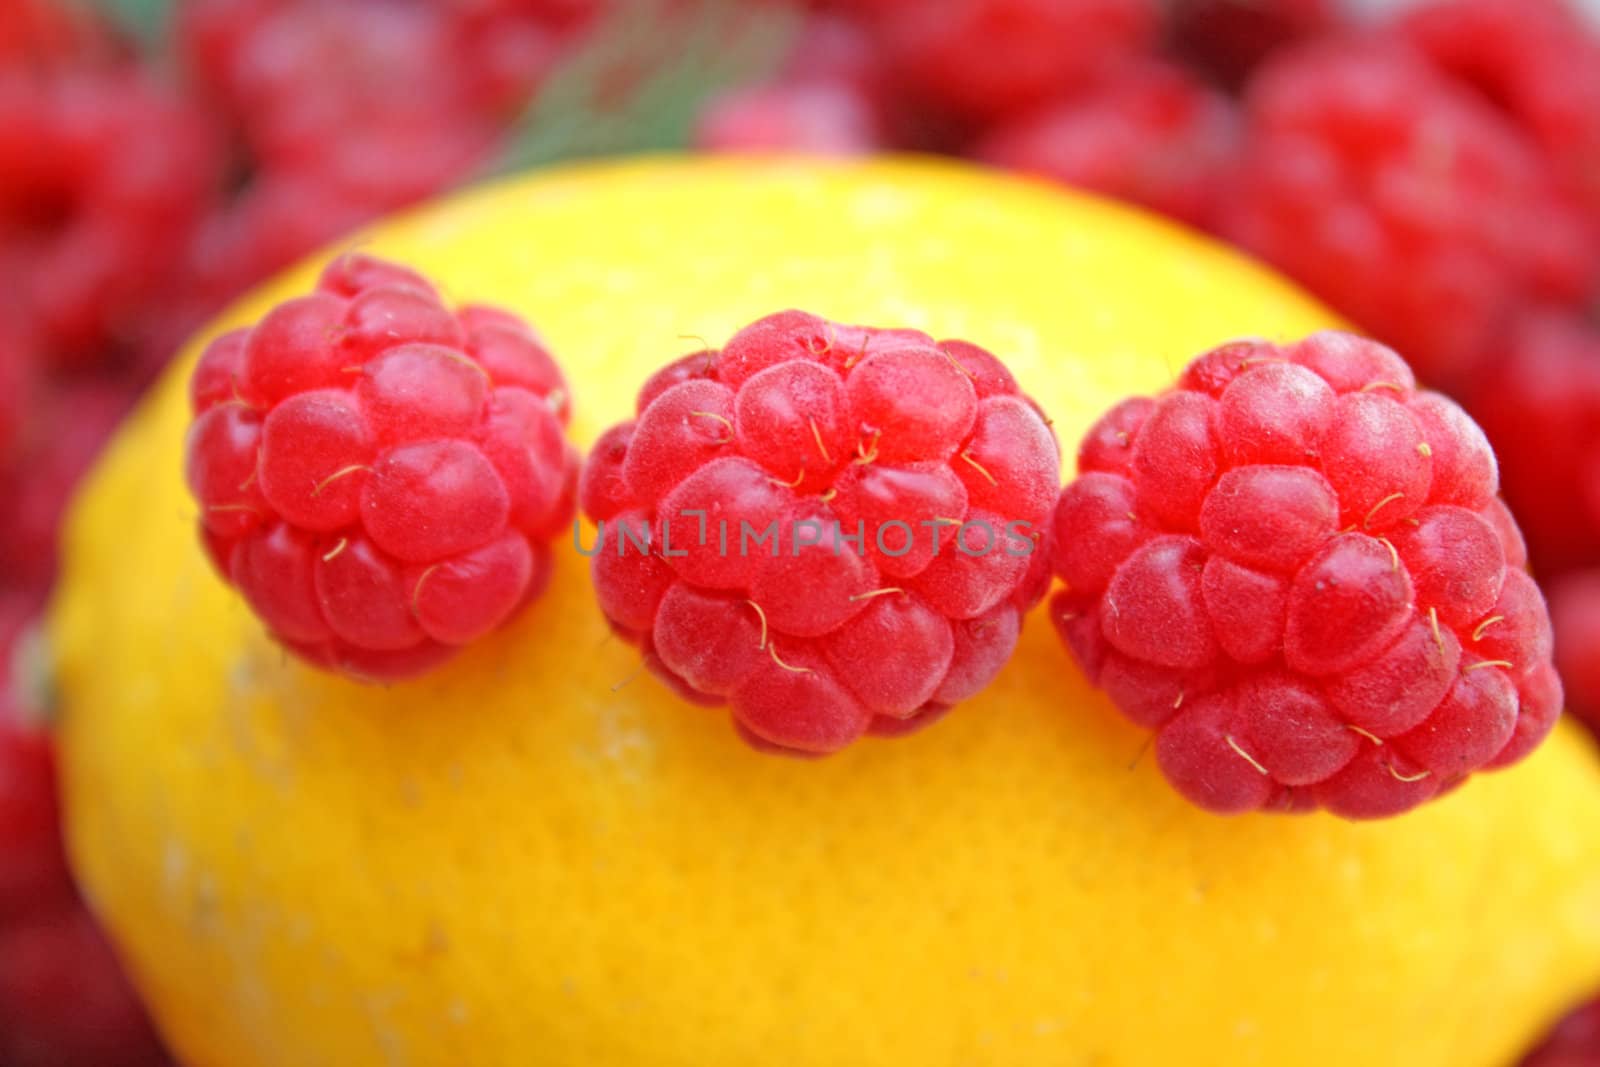 Close up of the three raspberries on the lemon